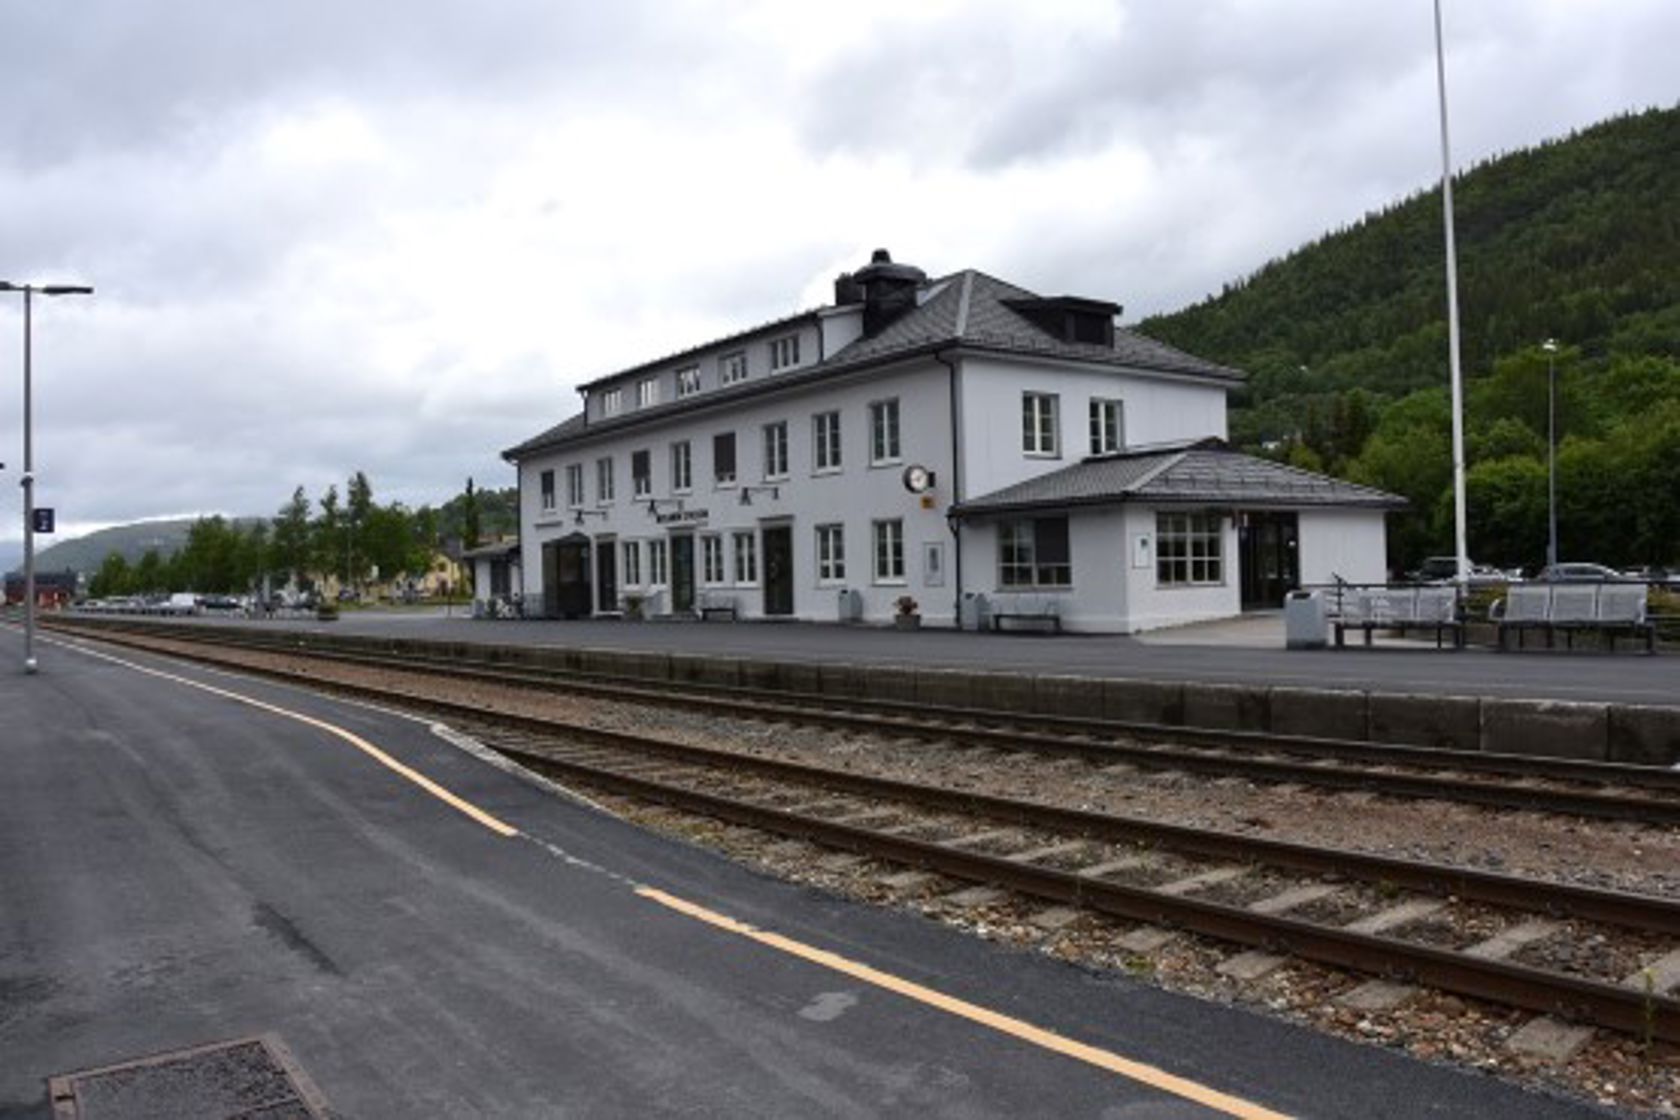 Exterior view of Mosjøen station